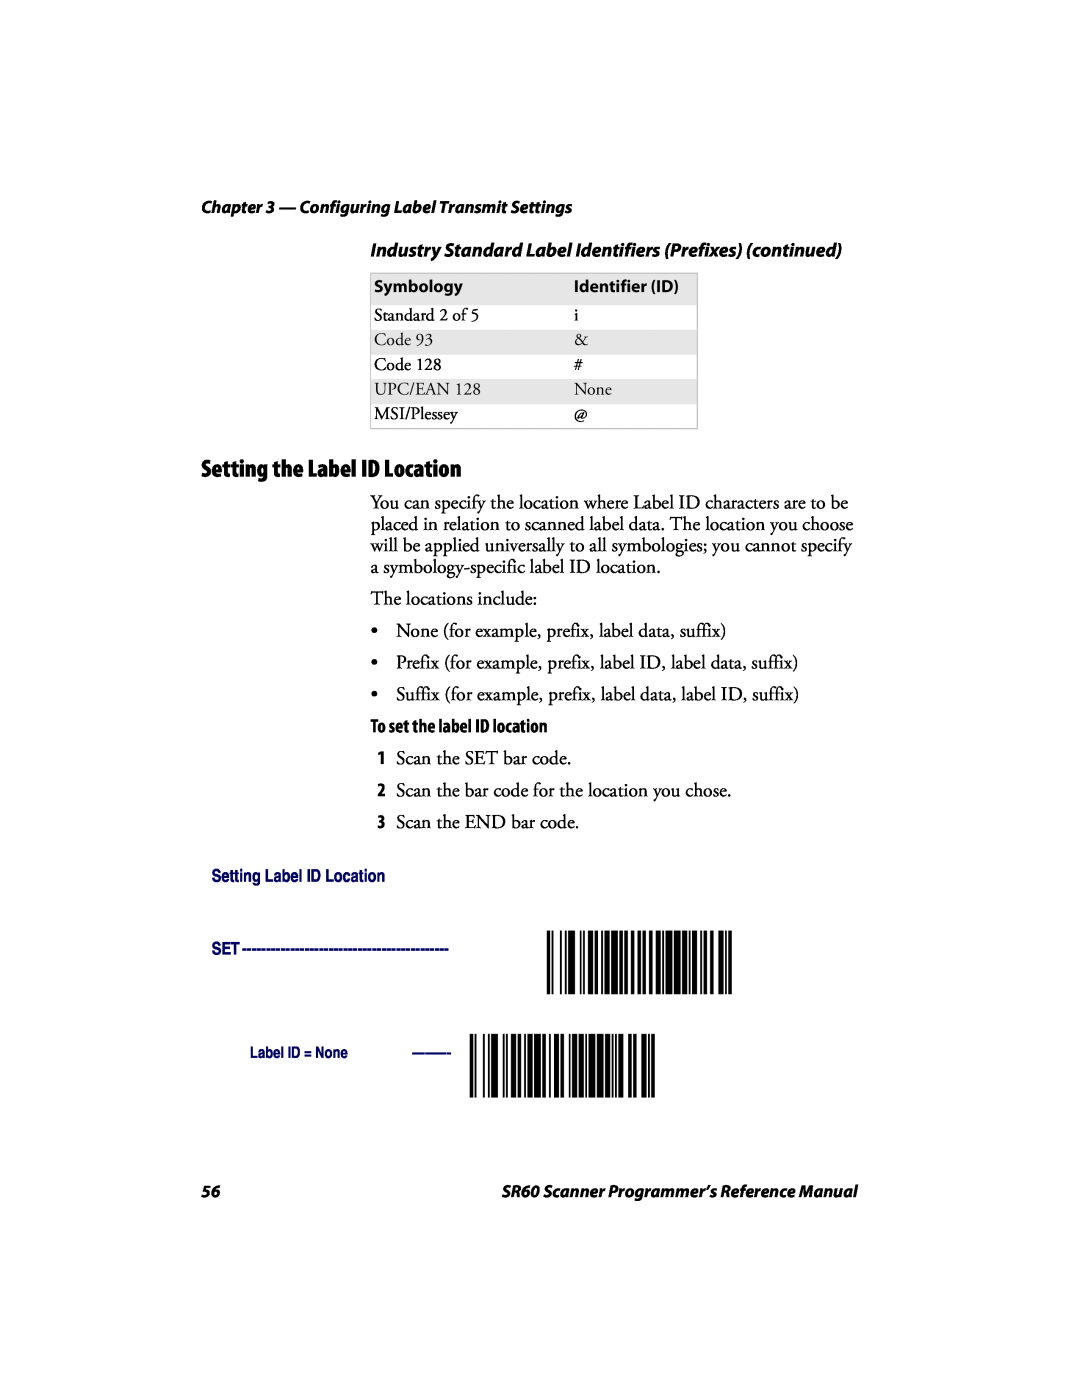 Intermec SR60 manual Setting the Label ID Location, Industry Standard Label Identifiers Prefixes continued 